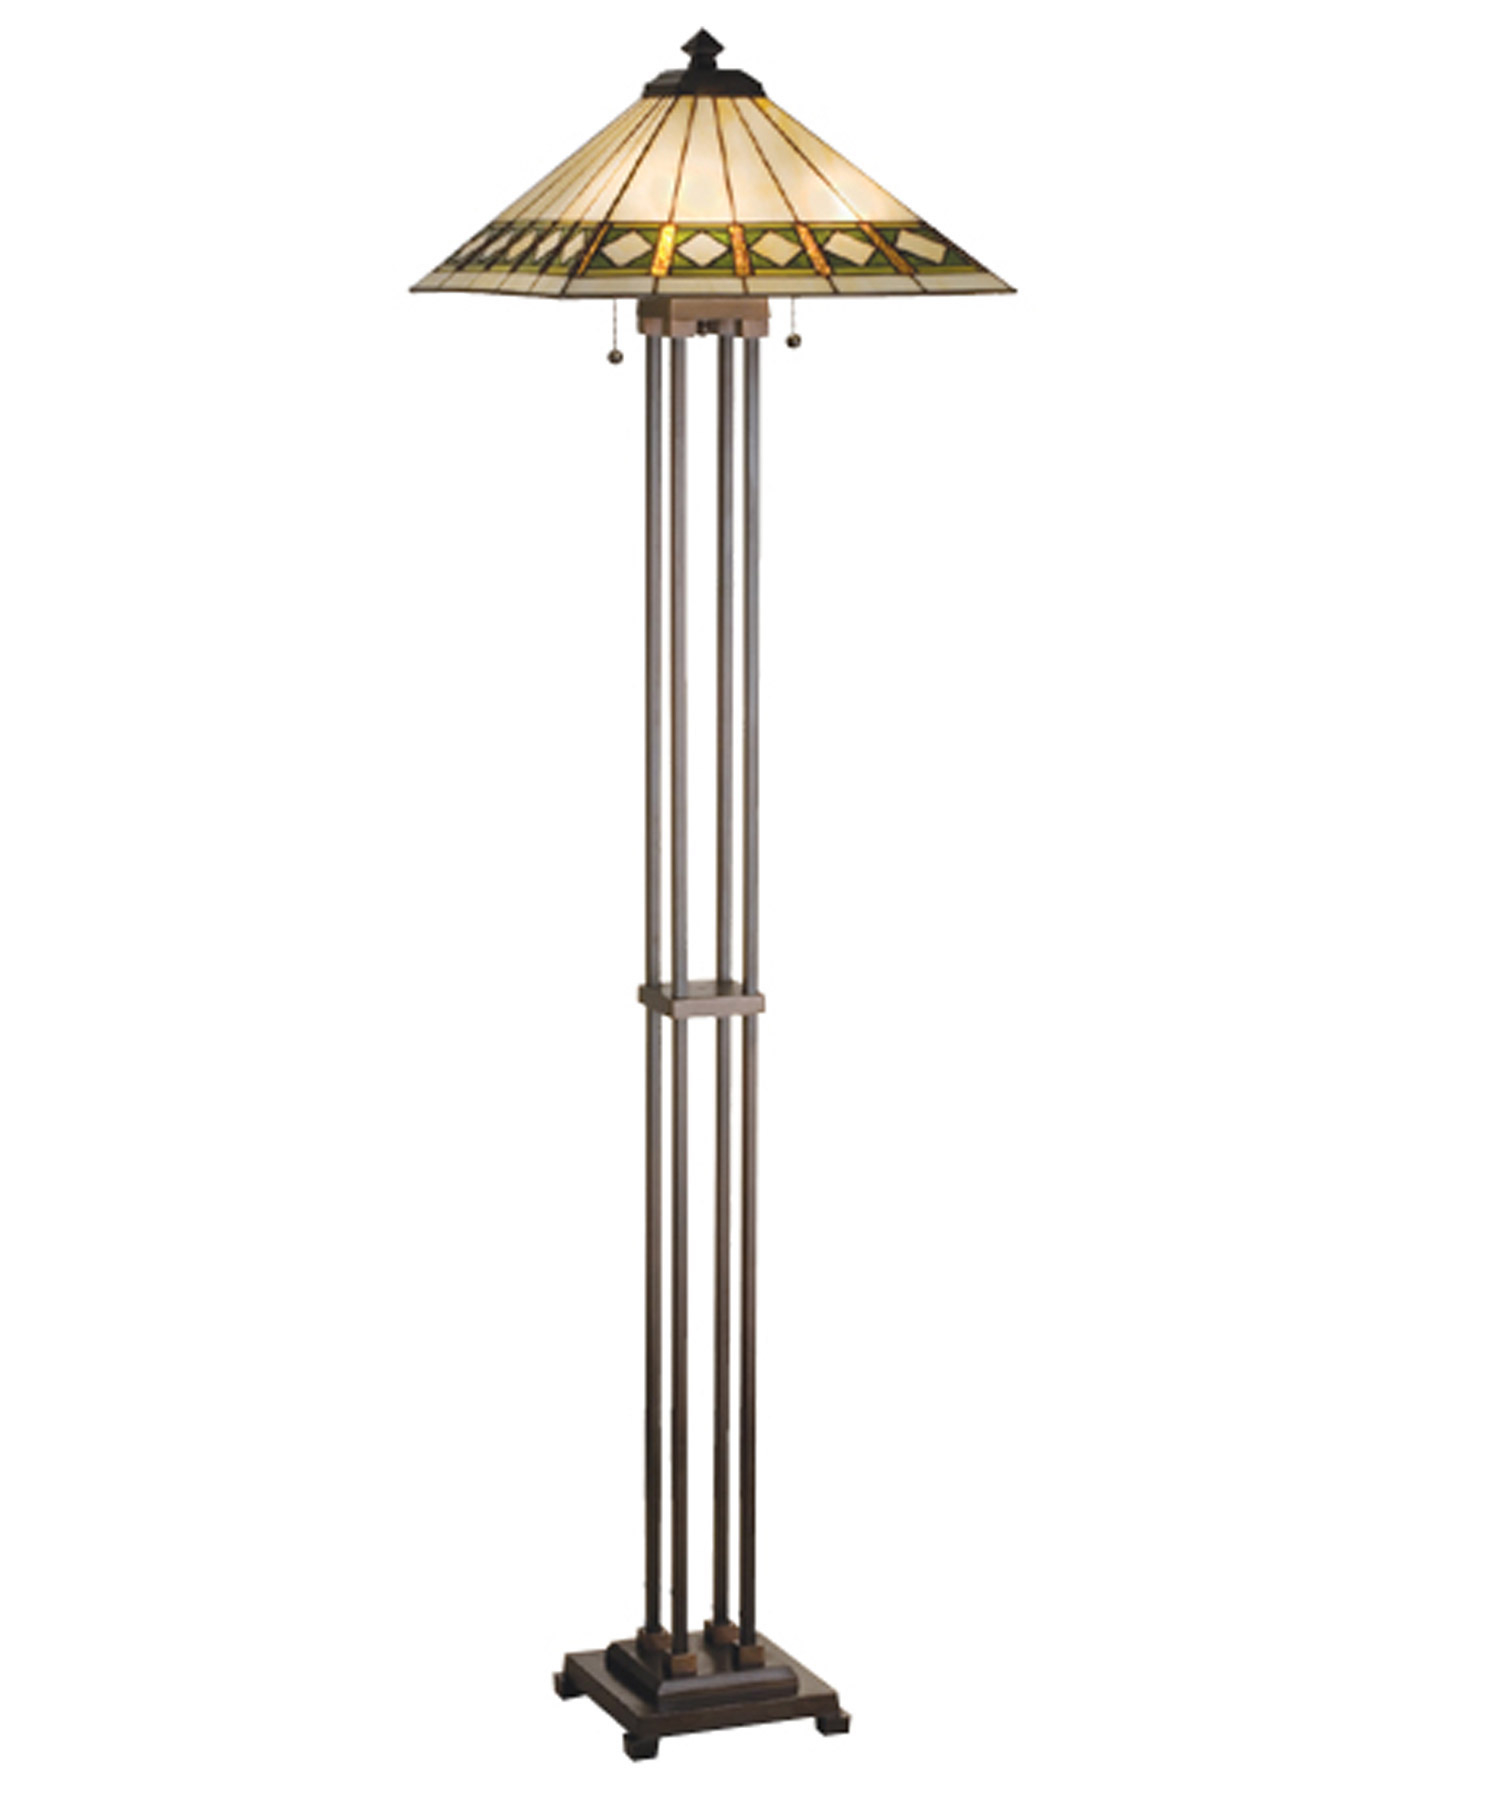 Meyda 17385 Diamond Floor Lamp throughout sizing 1500 X 1800